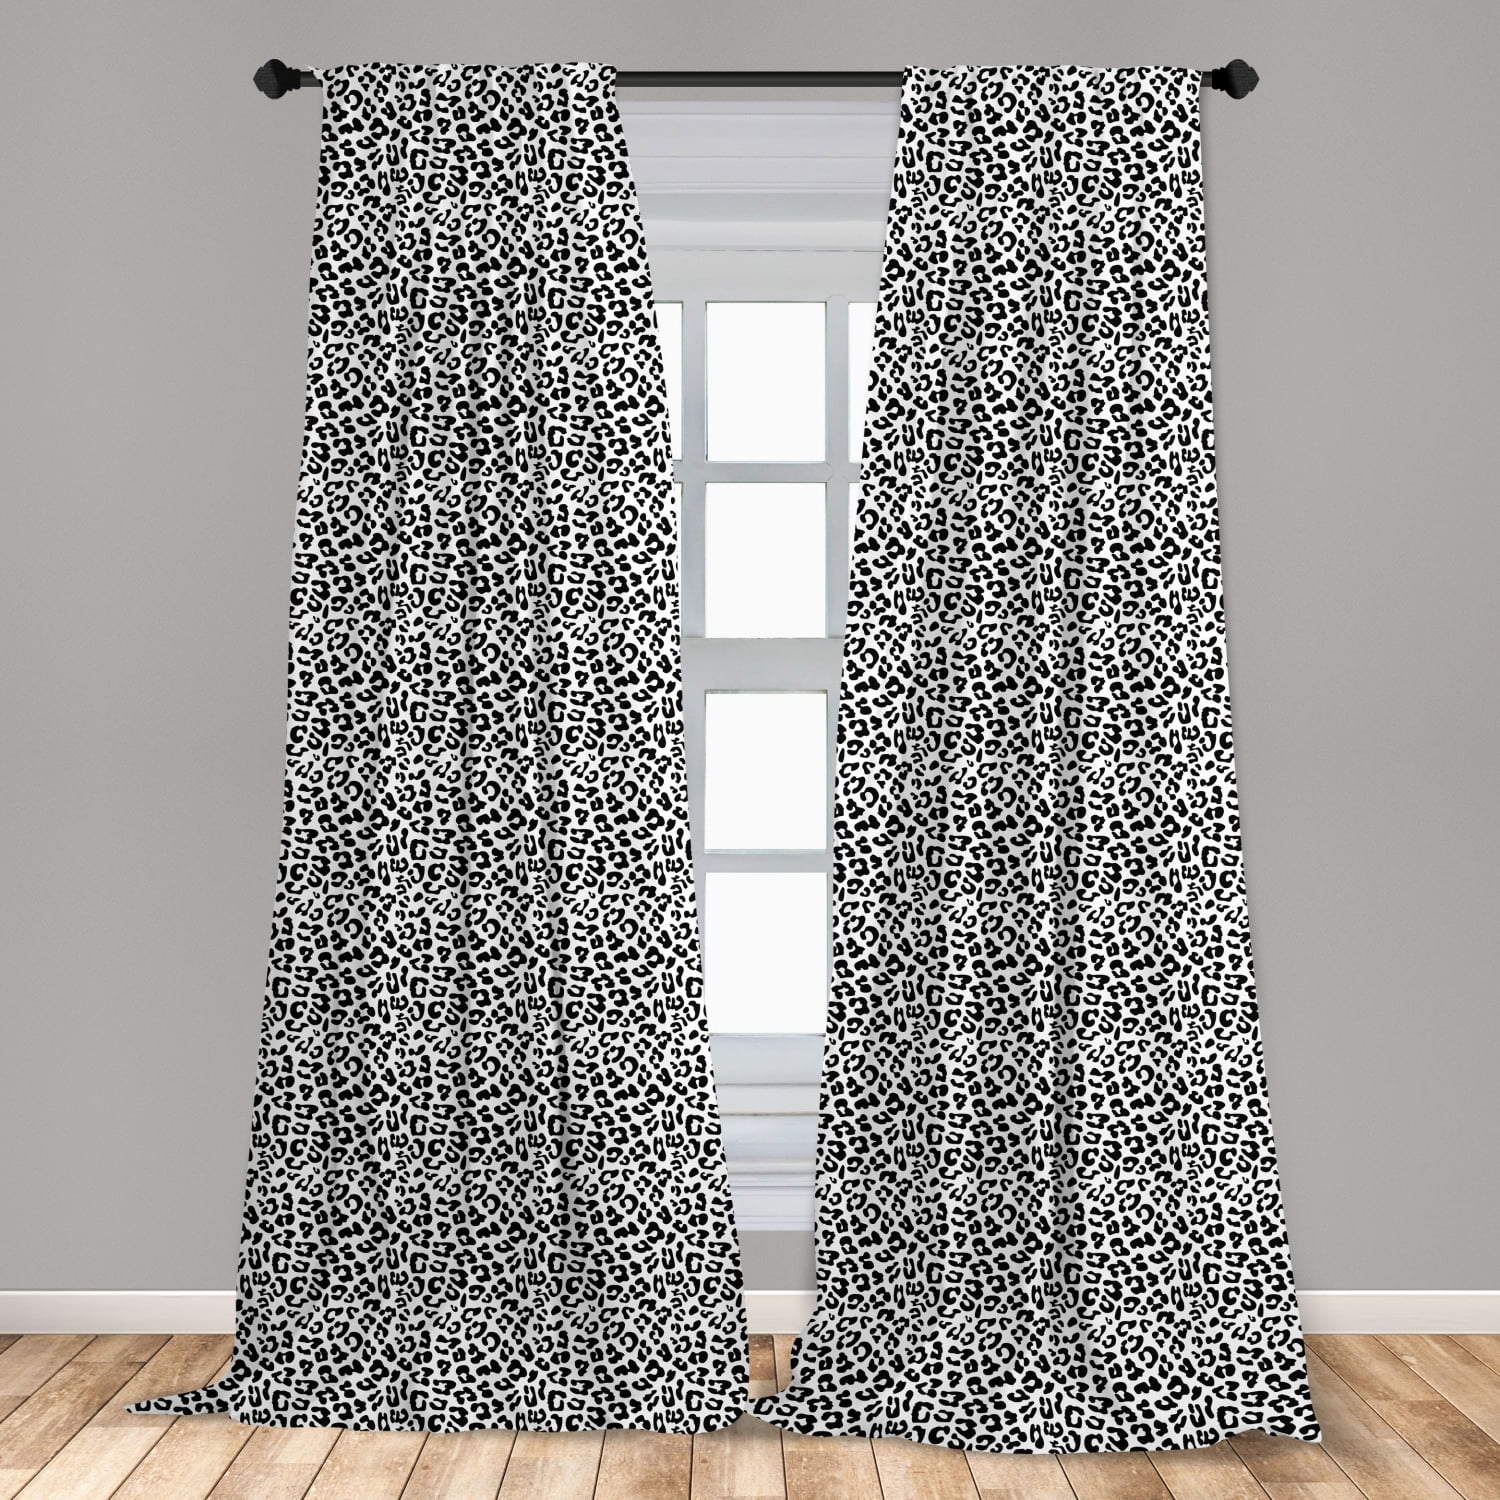 Details about   3D Leopard Window Curtain Wild Animal Curtains Drapes Decorative Home Decor 